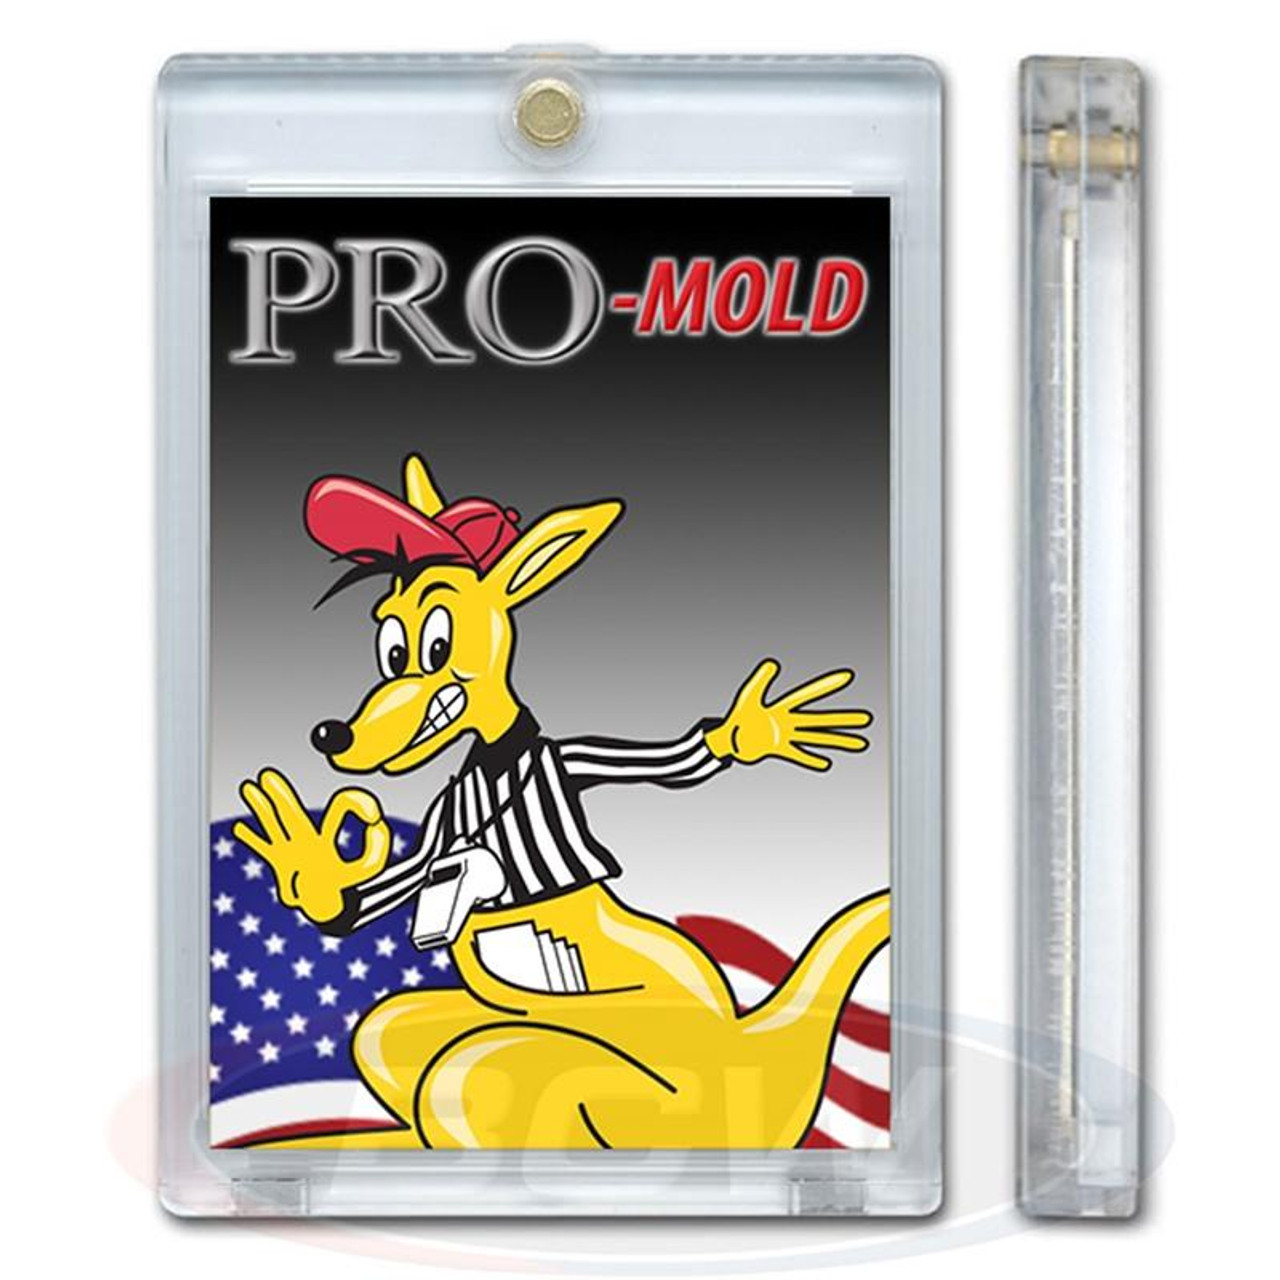 Pro-Mold Magnetic Card Holder 120pt - 20ct Box